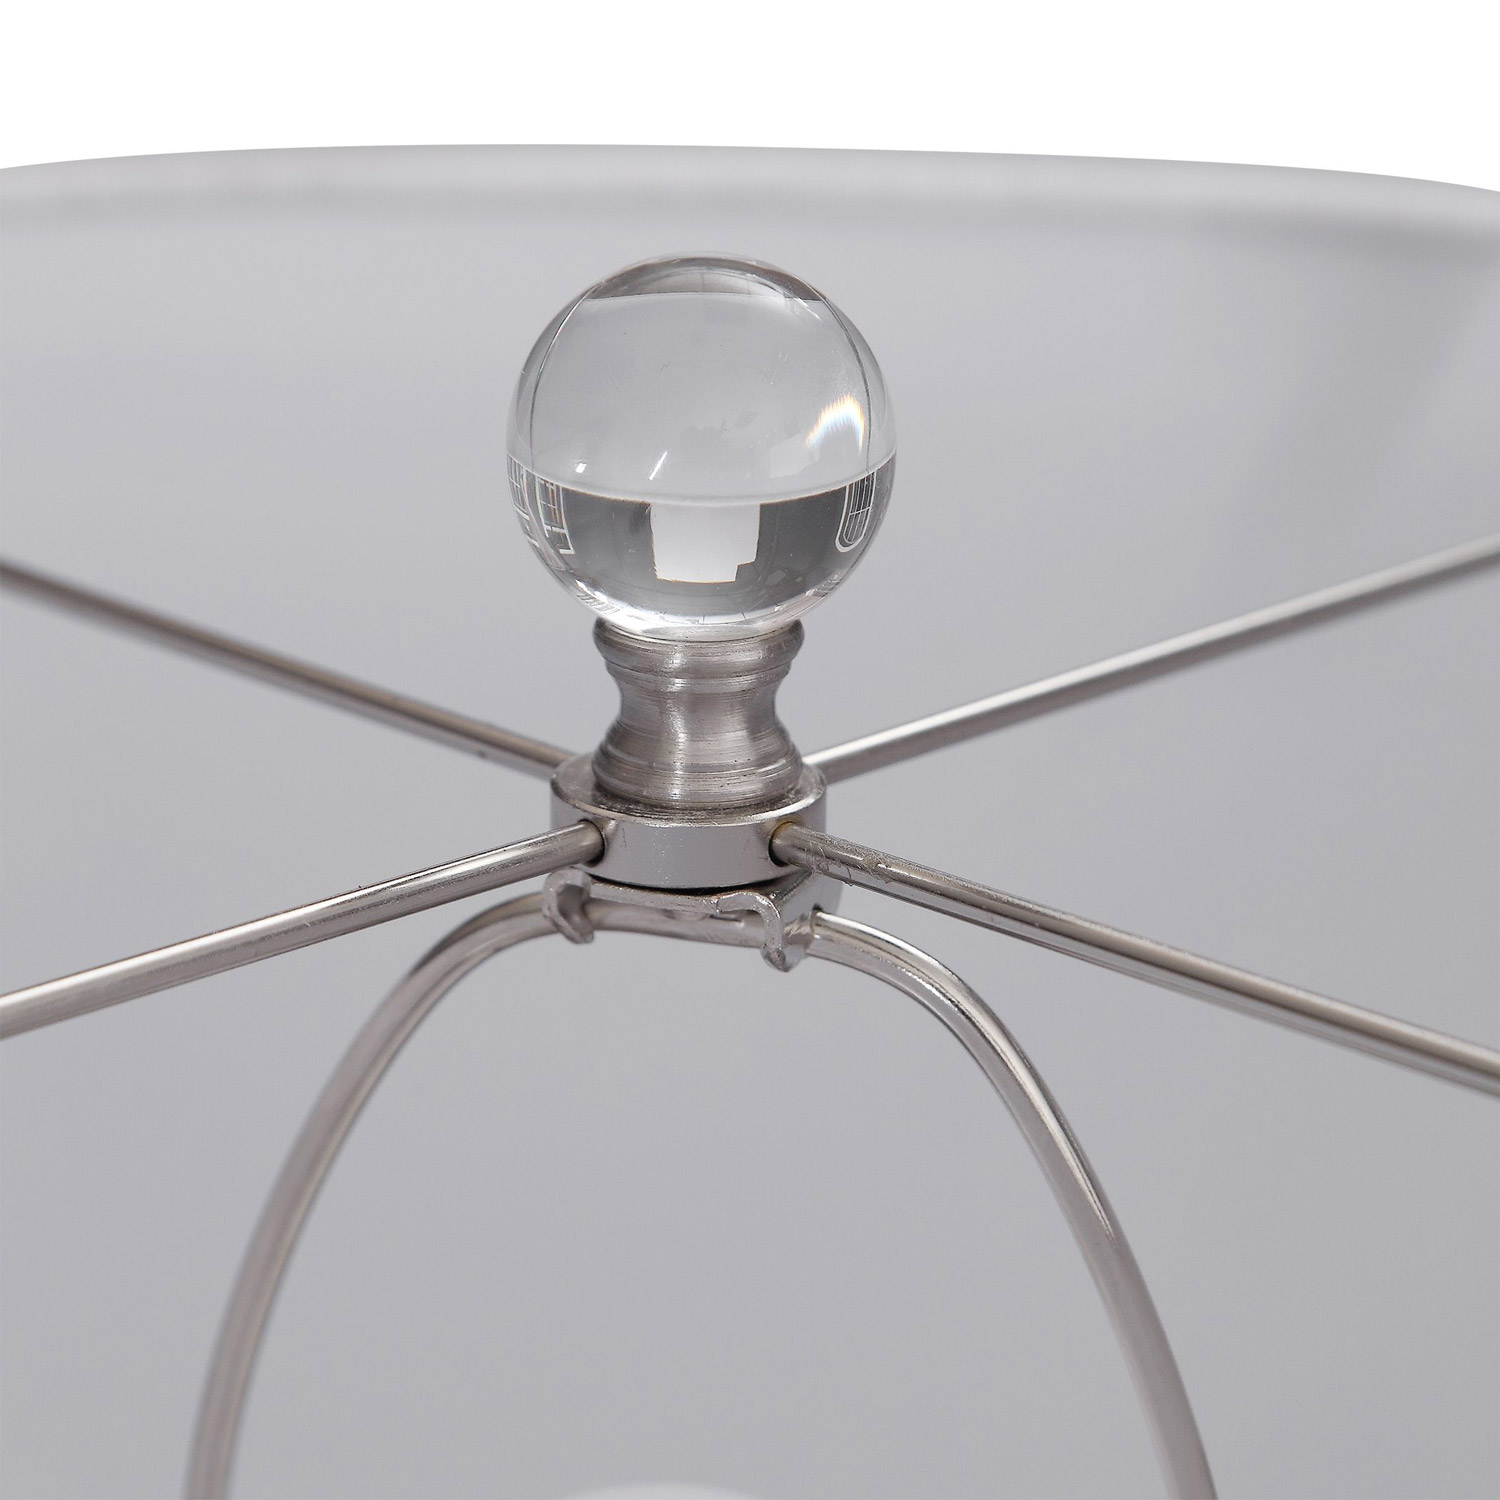 Uttermost Eline Table Lamp - Blue Glass